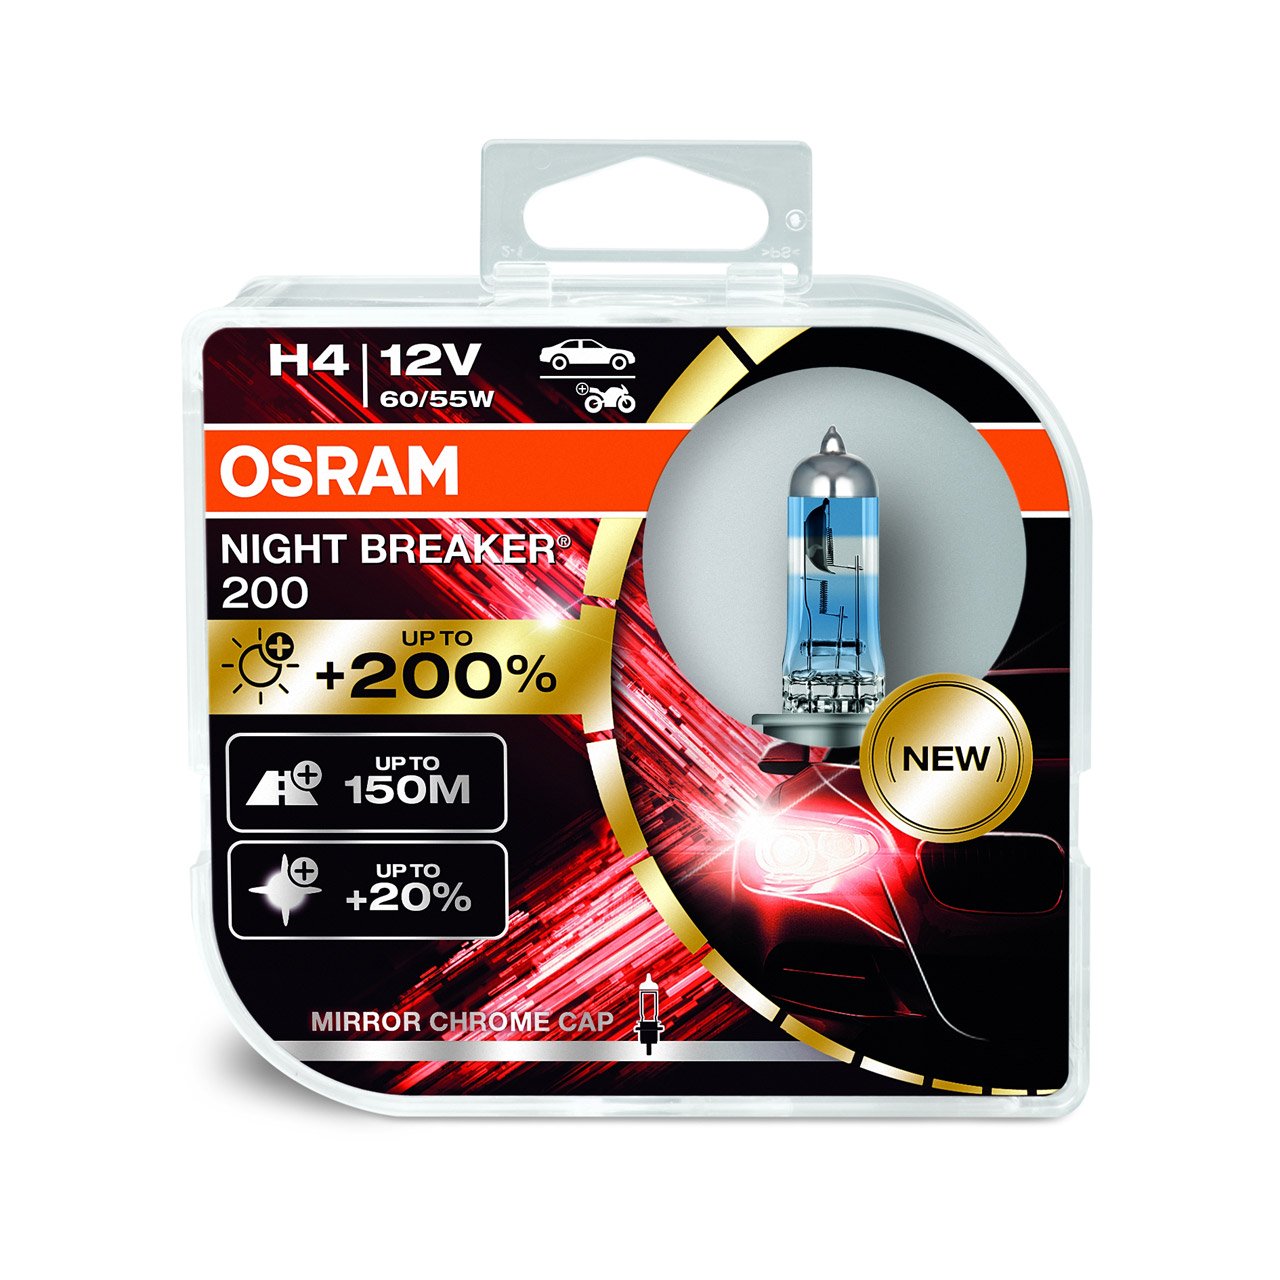 2x OSRAM H4 NIGHT BREAKER 200 Glühlampe Halogenlampe 12V 60/55W P43t +200%